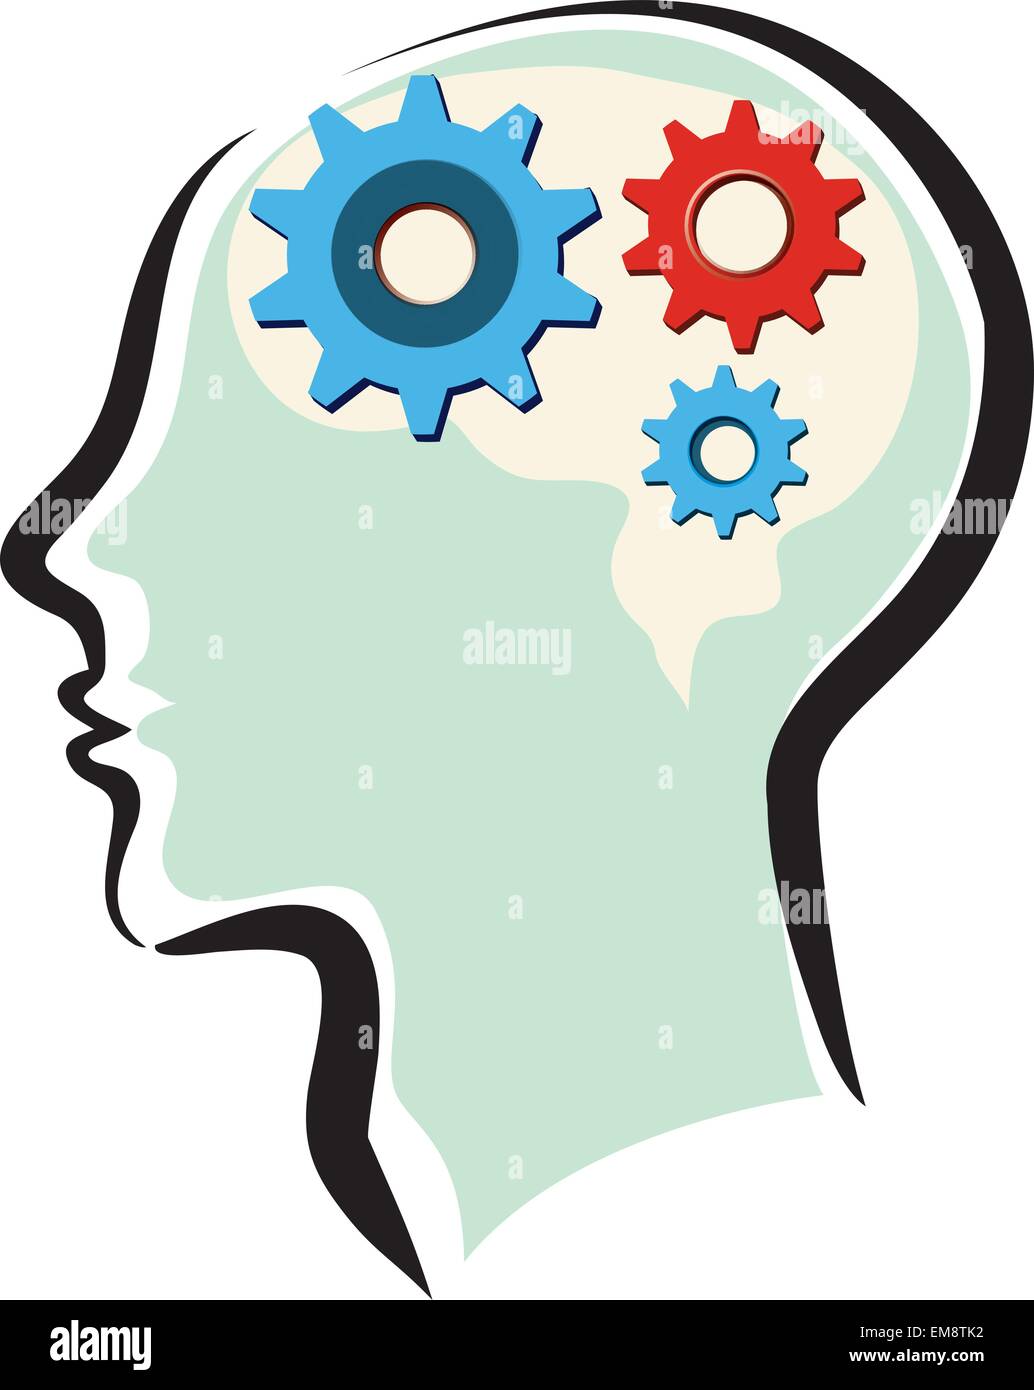 Human brain logo hi-res stock photography and images - Alamy